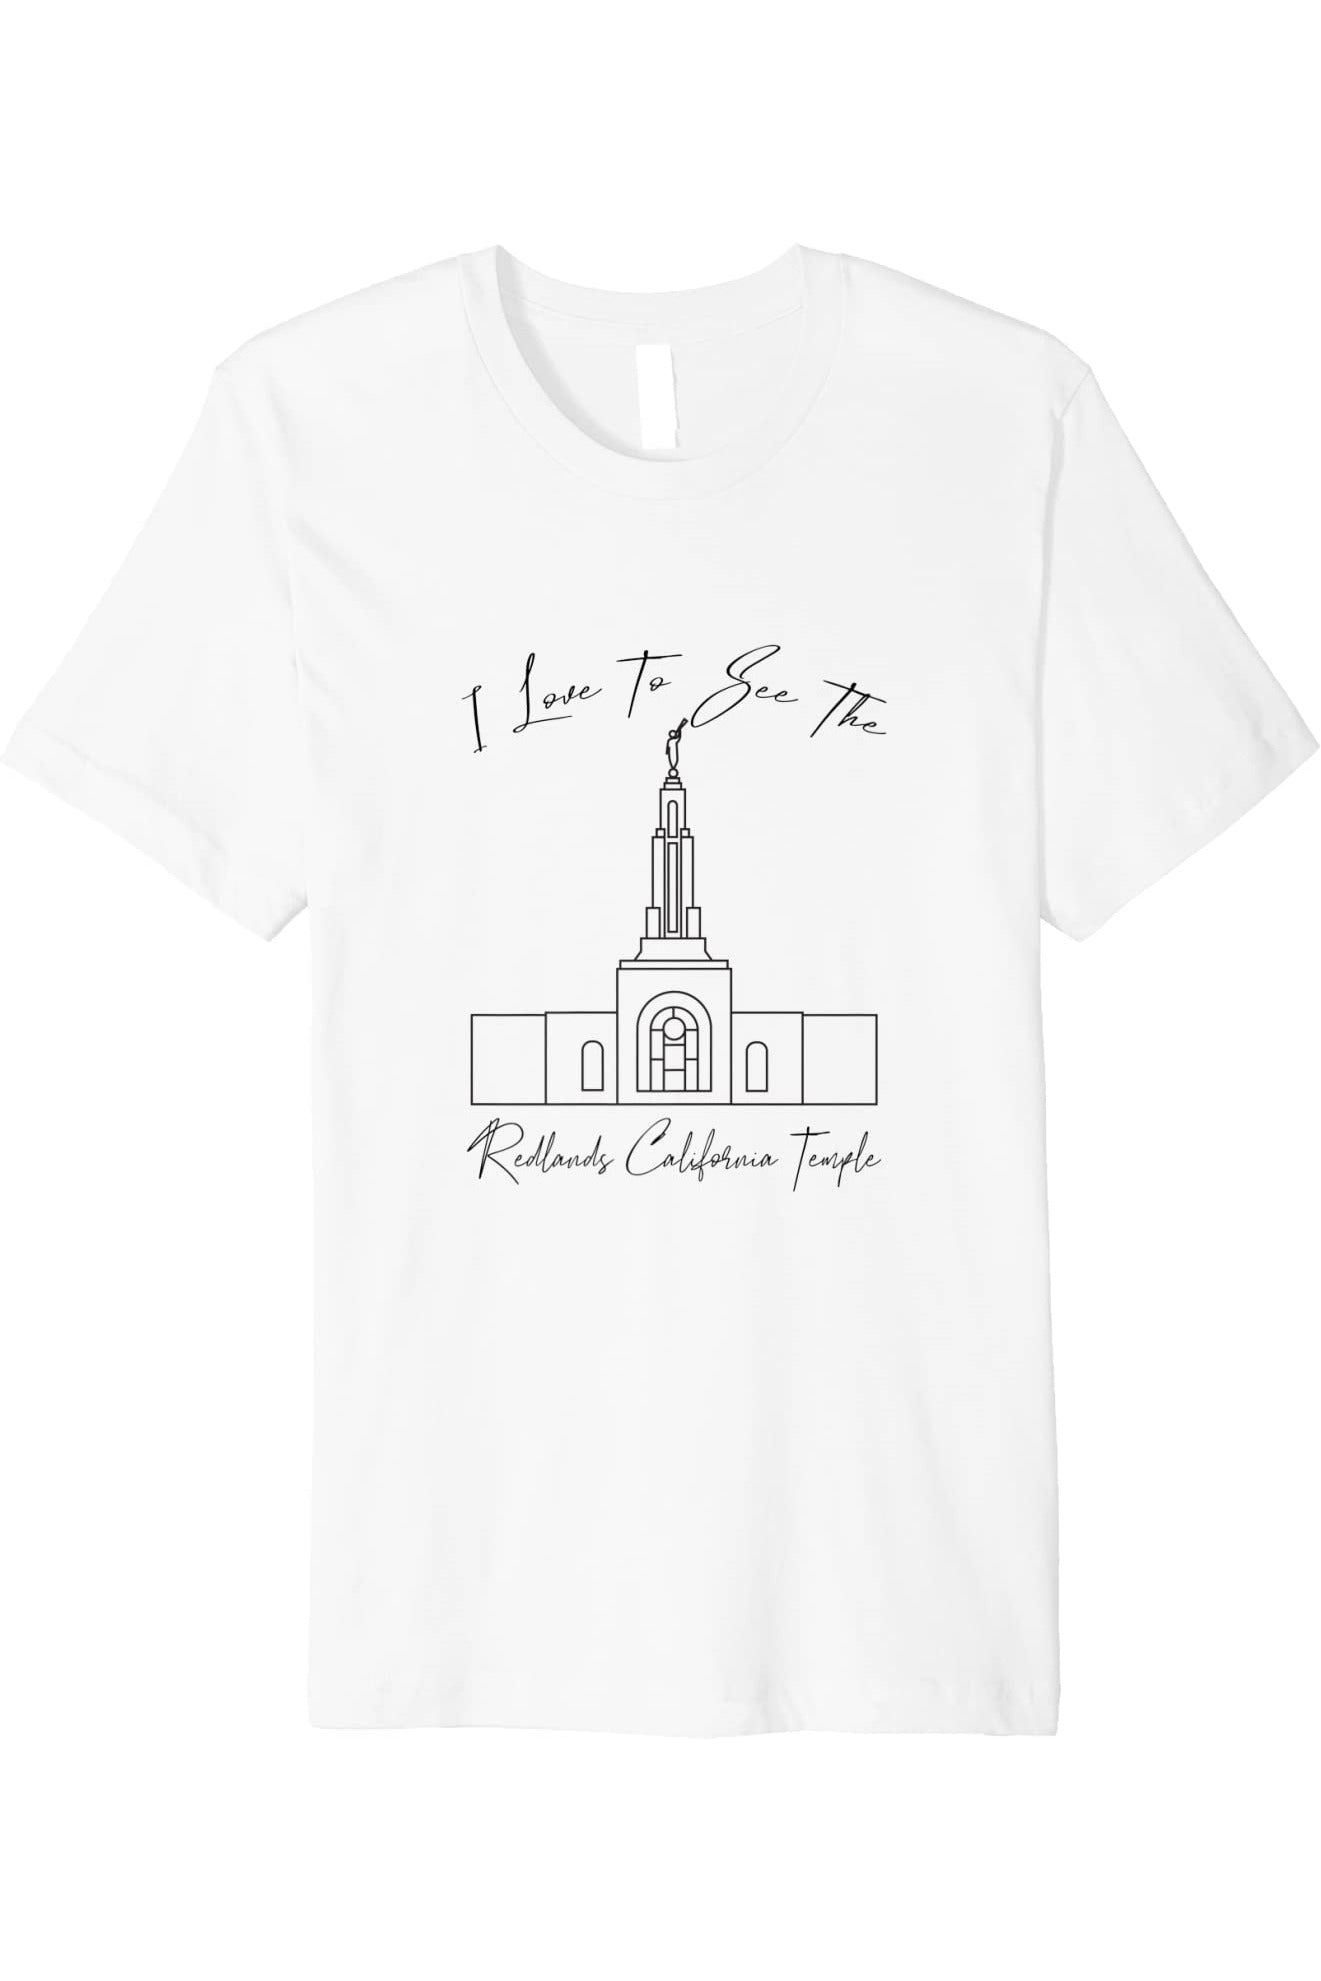 Redlands California Temple T-Shirt - Premium - Calligraphy Style (English) US